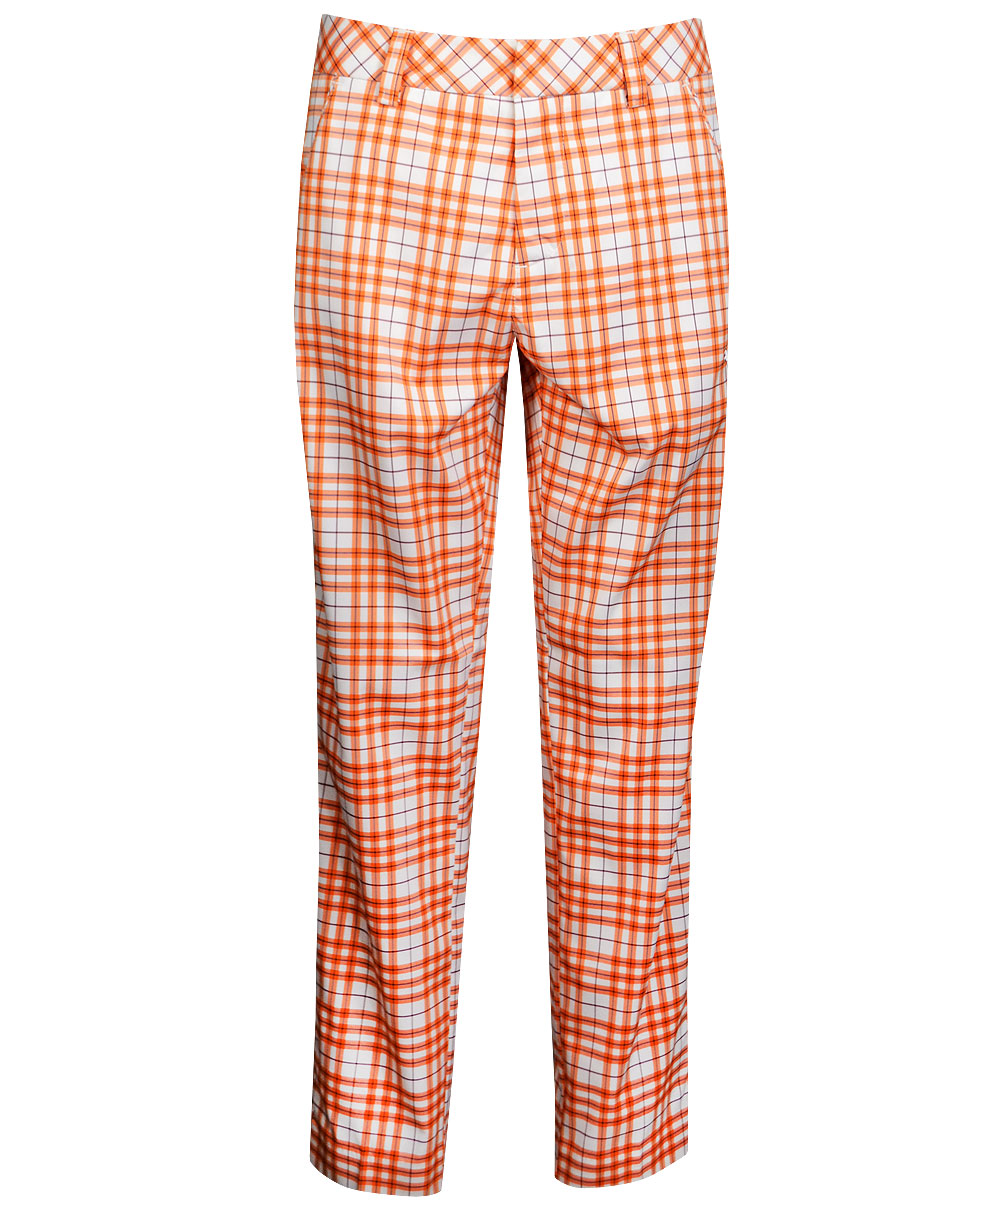 puma golf trousers orange